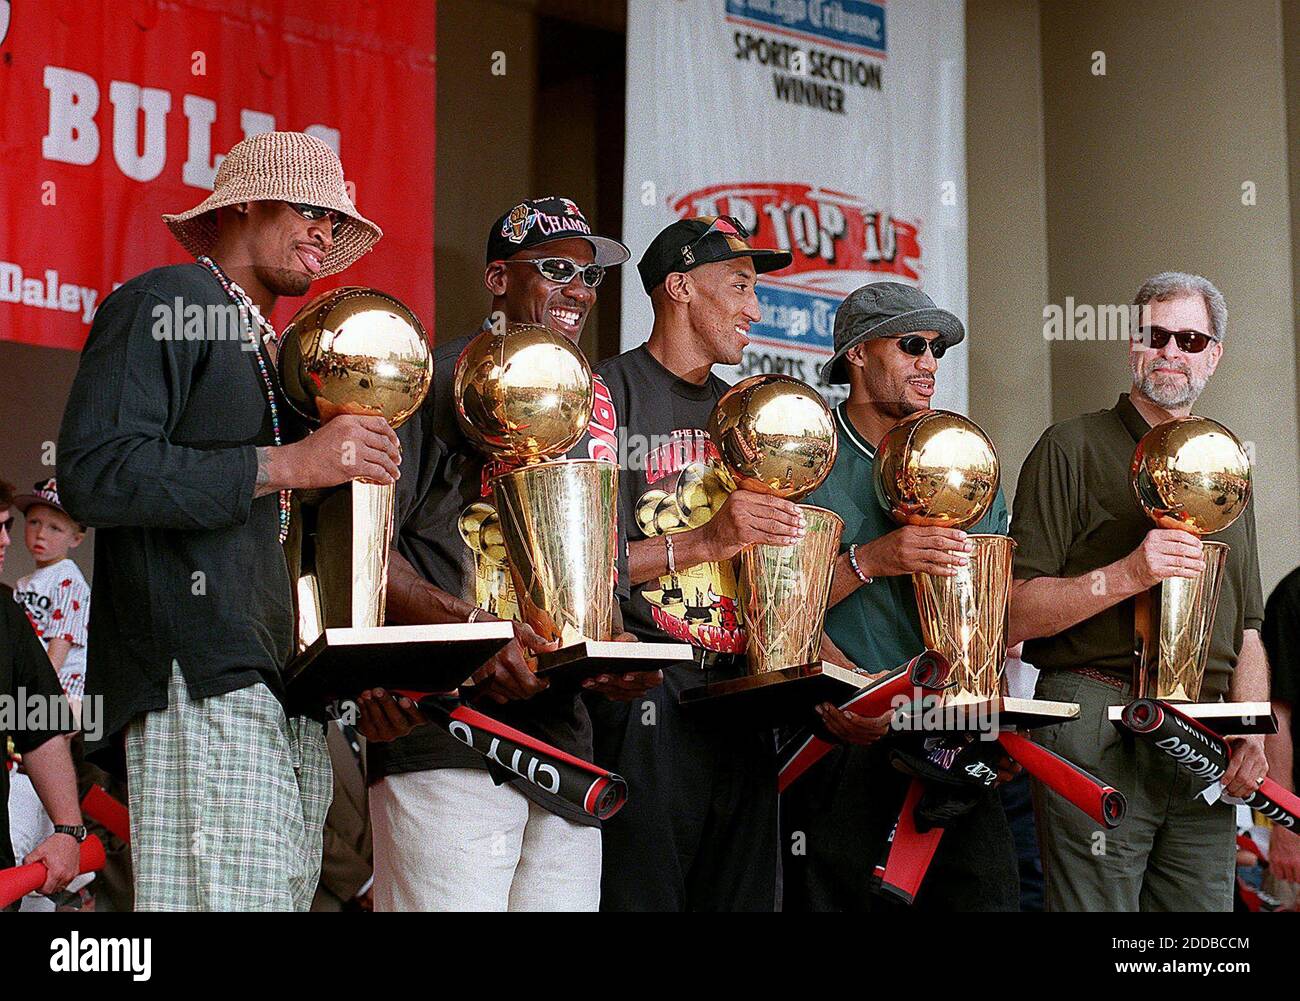 HD wallpaper: NBA, sports, Scottie Pippen, basketball, Dennis